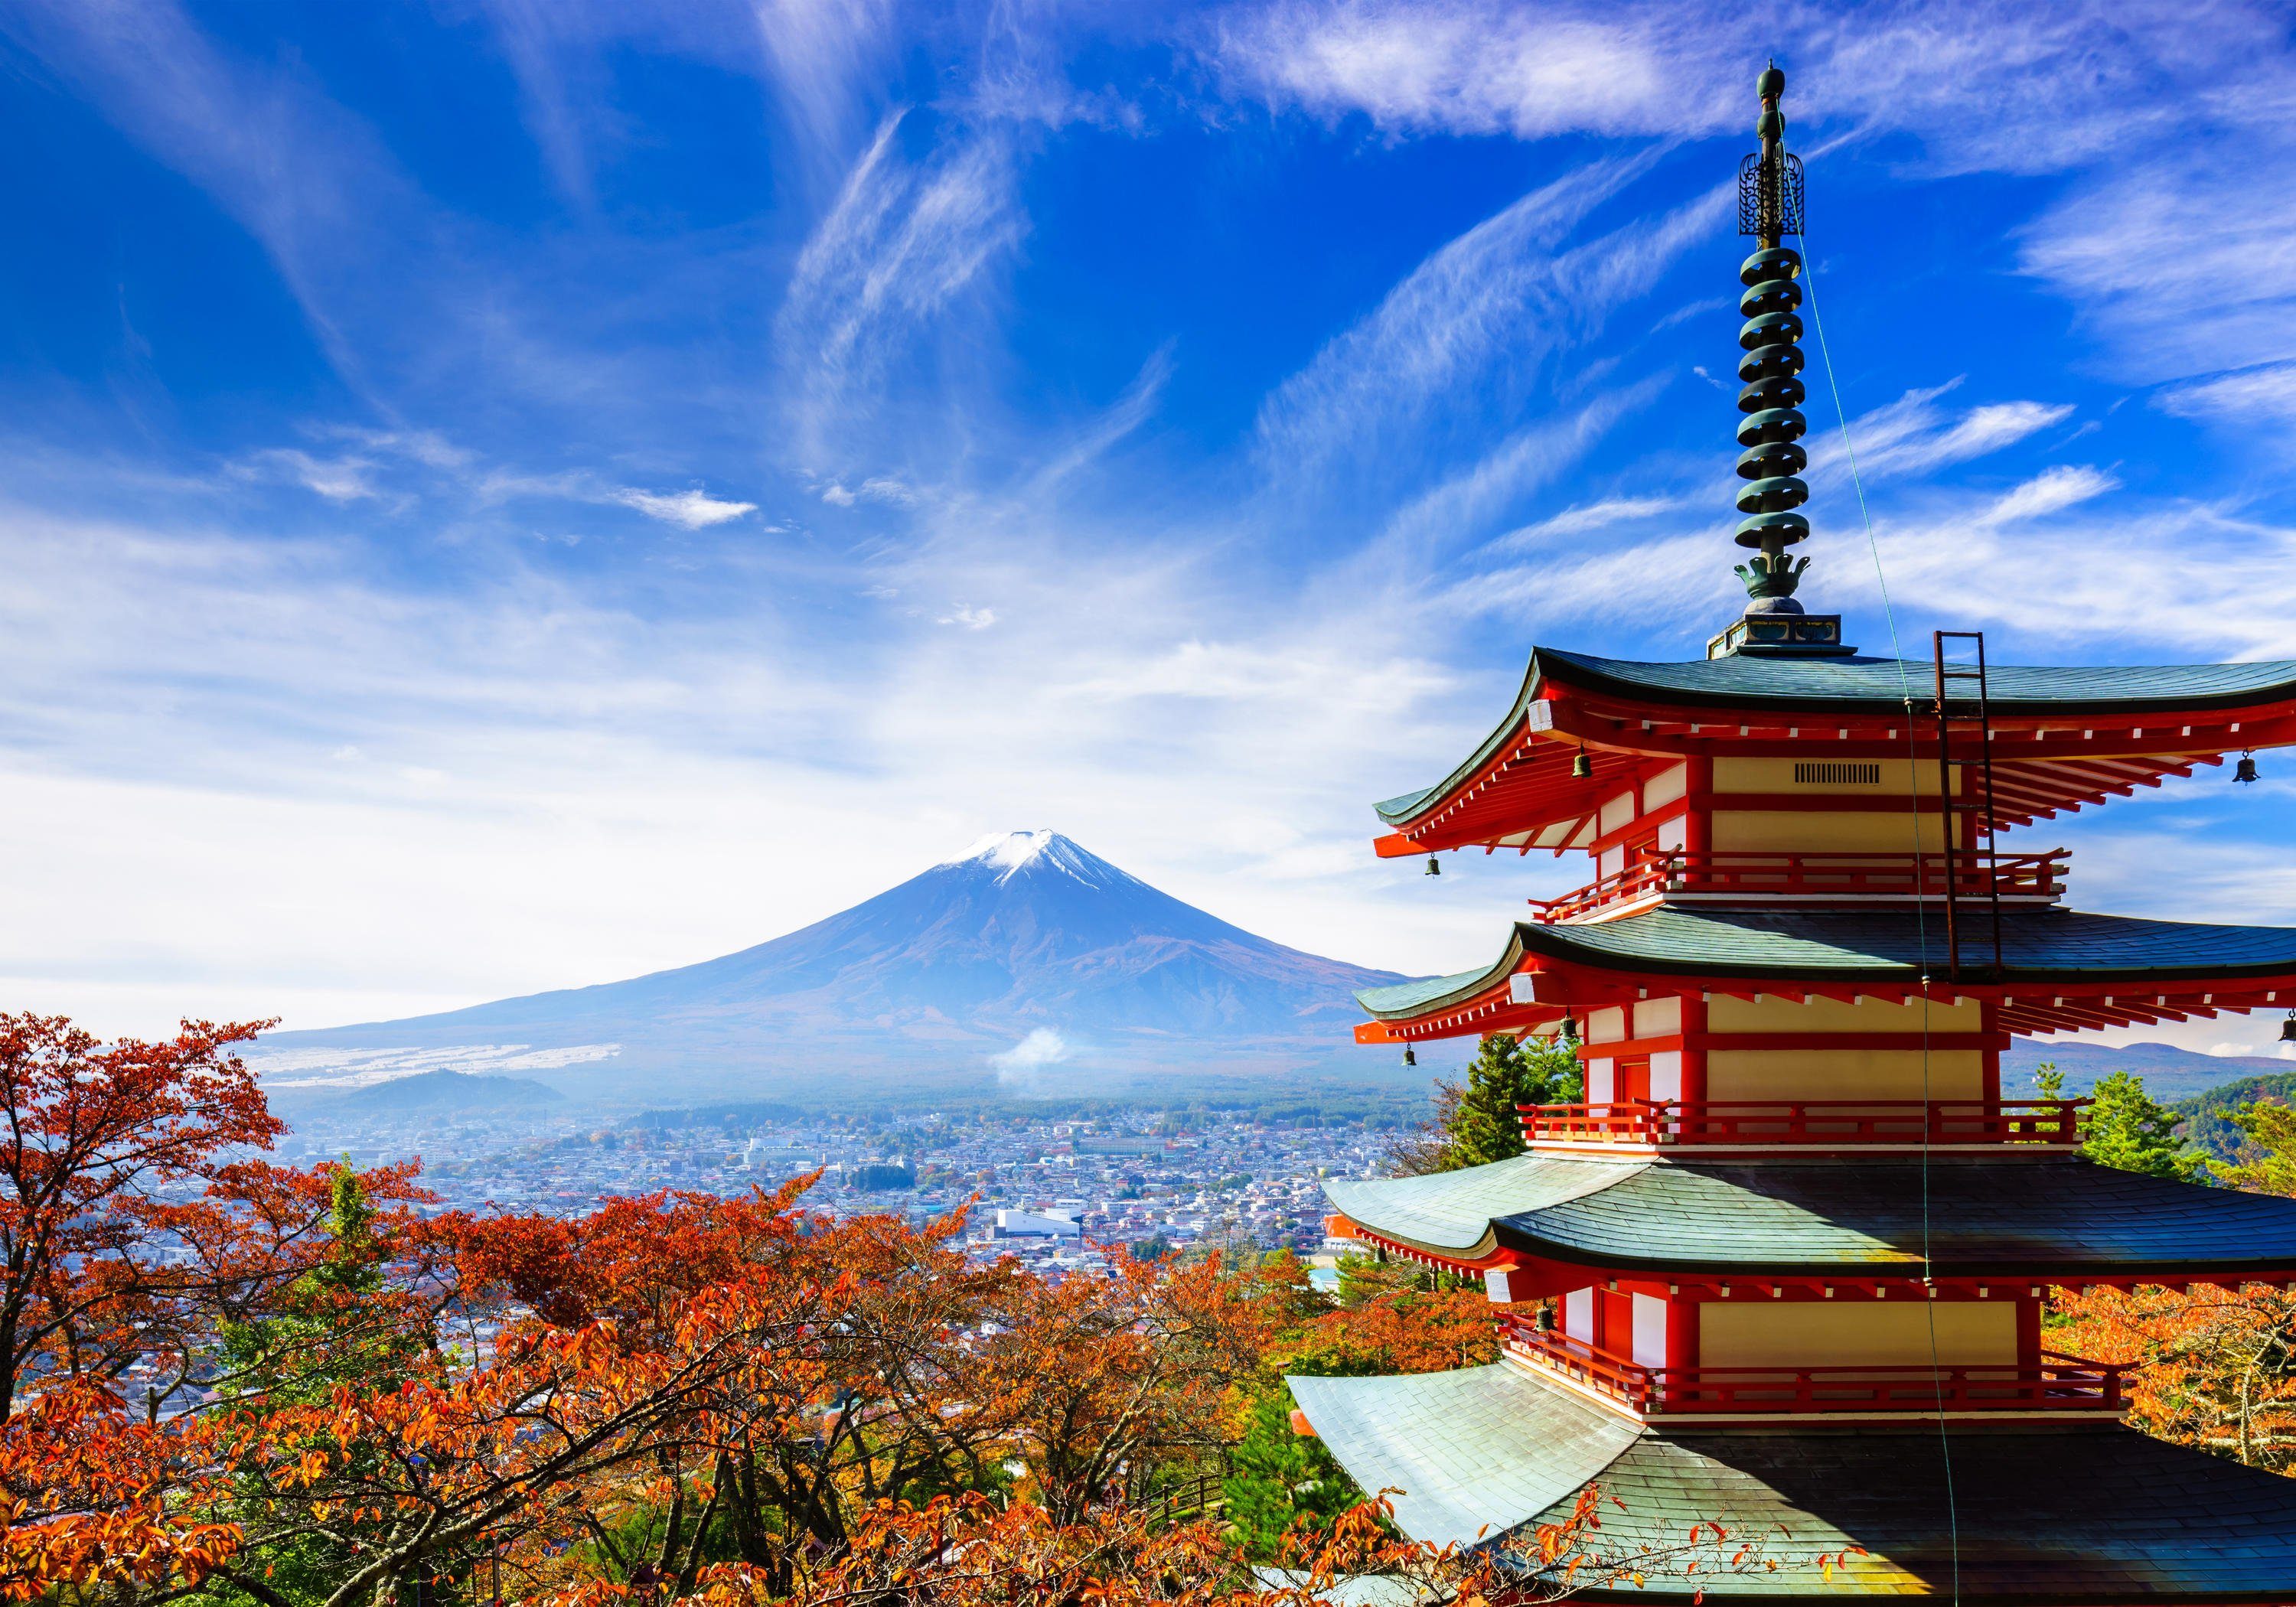 wandmotiv24 Fototapete Mount Fuji-Chureito Pagoda, glatt, Wandtapete, Motivtapete, matt, Vliestapete